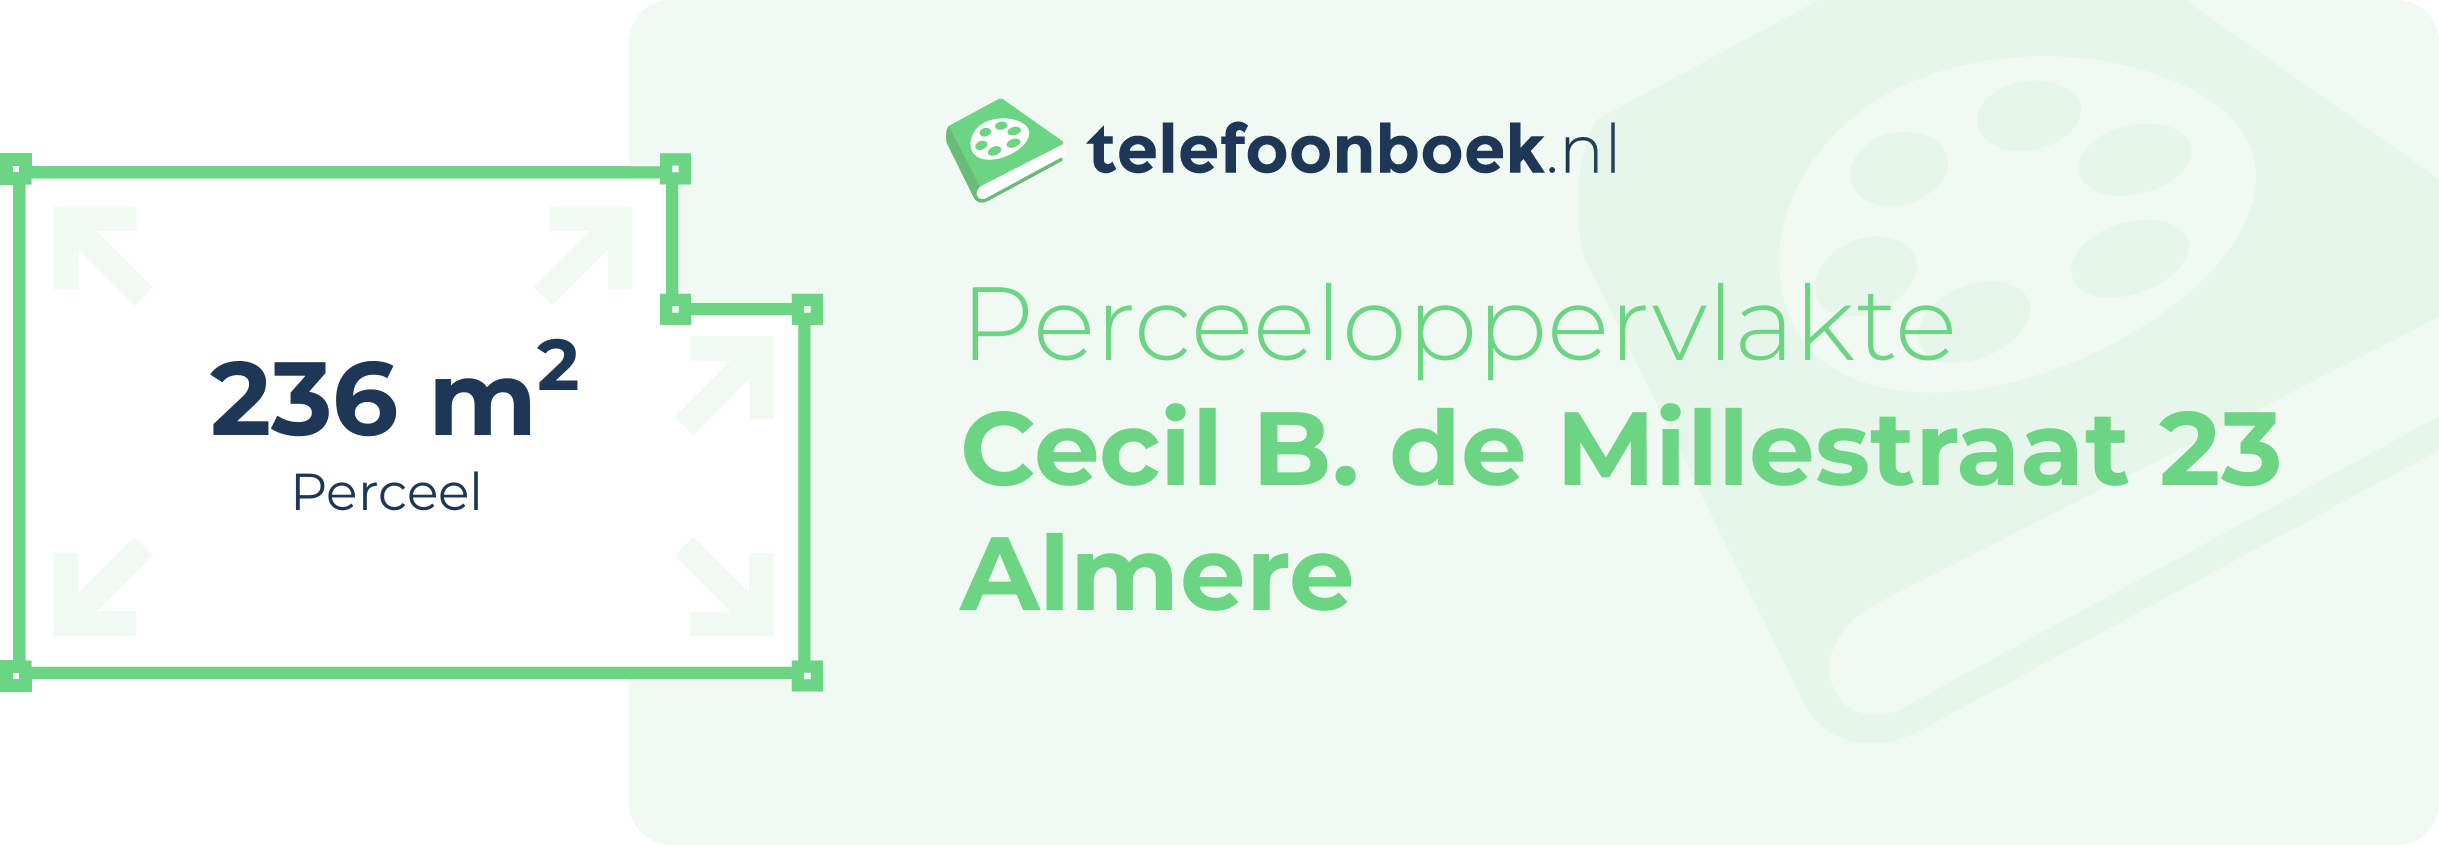 Perceeloppervlakte Cecil B. De Millestraat 23 Almere